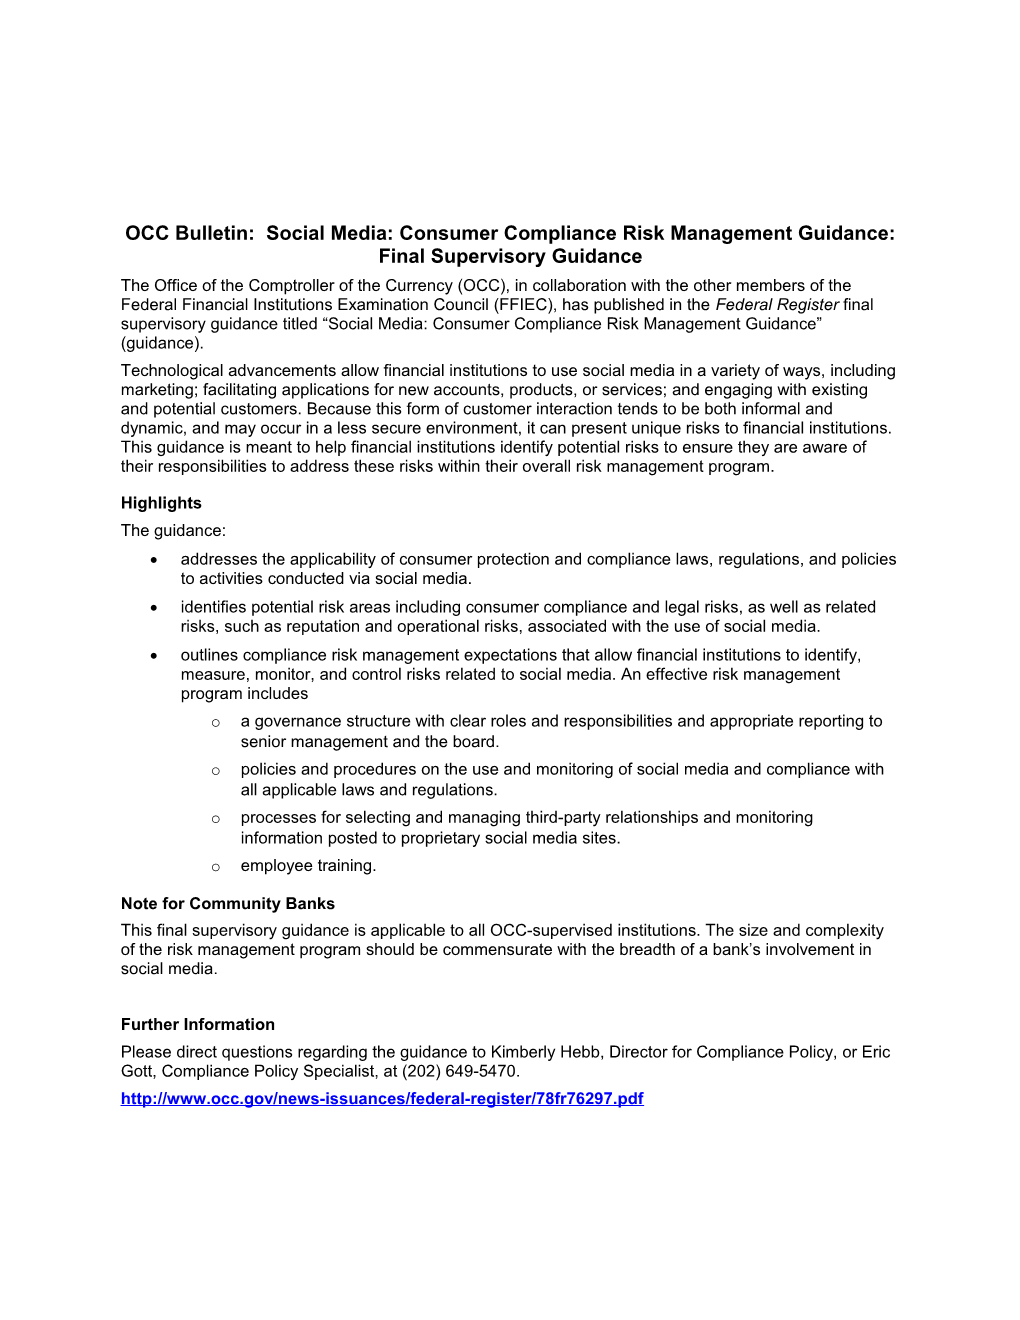 OCC Bulletin: Social Media: Consumer Compliance Risk Management Guidance: Final Supervisory